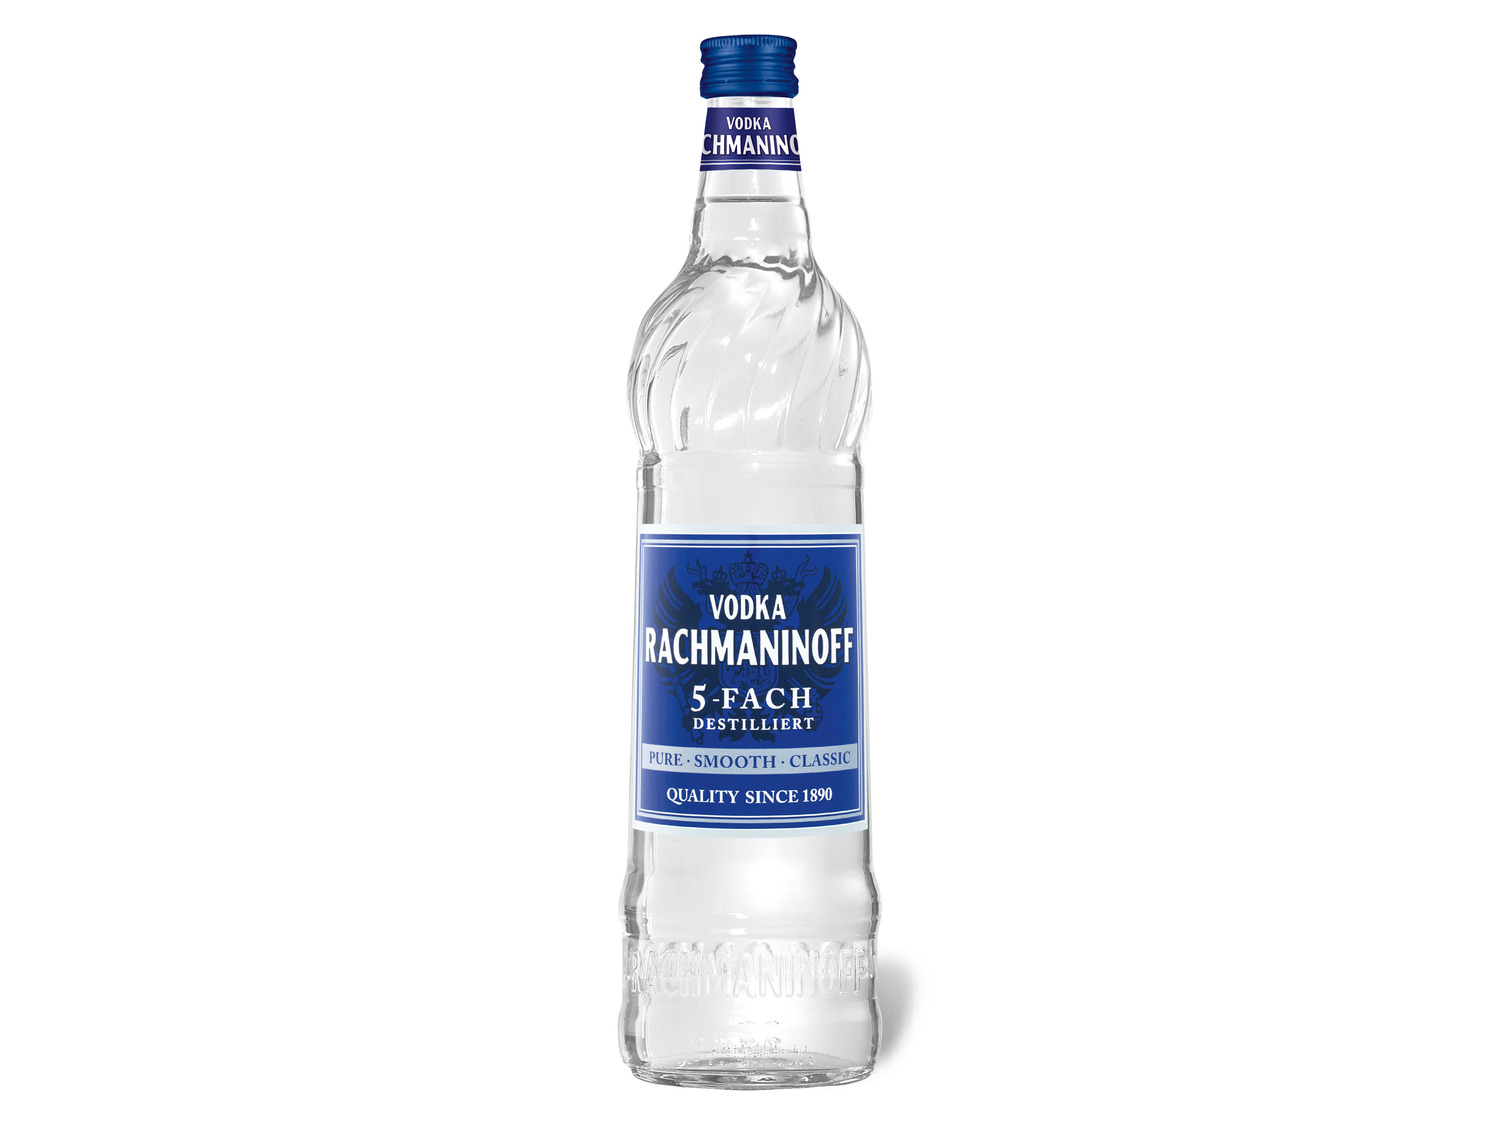 RACHMANINOFF Wodka 5-fach destilliert LIDL 40% | Vol